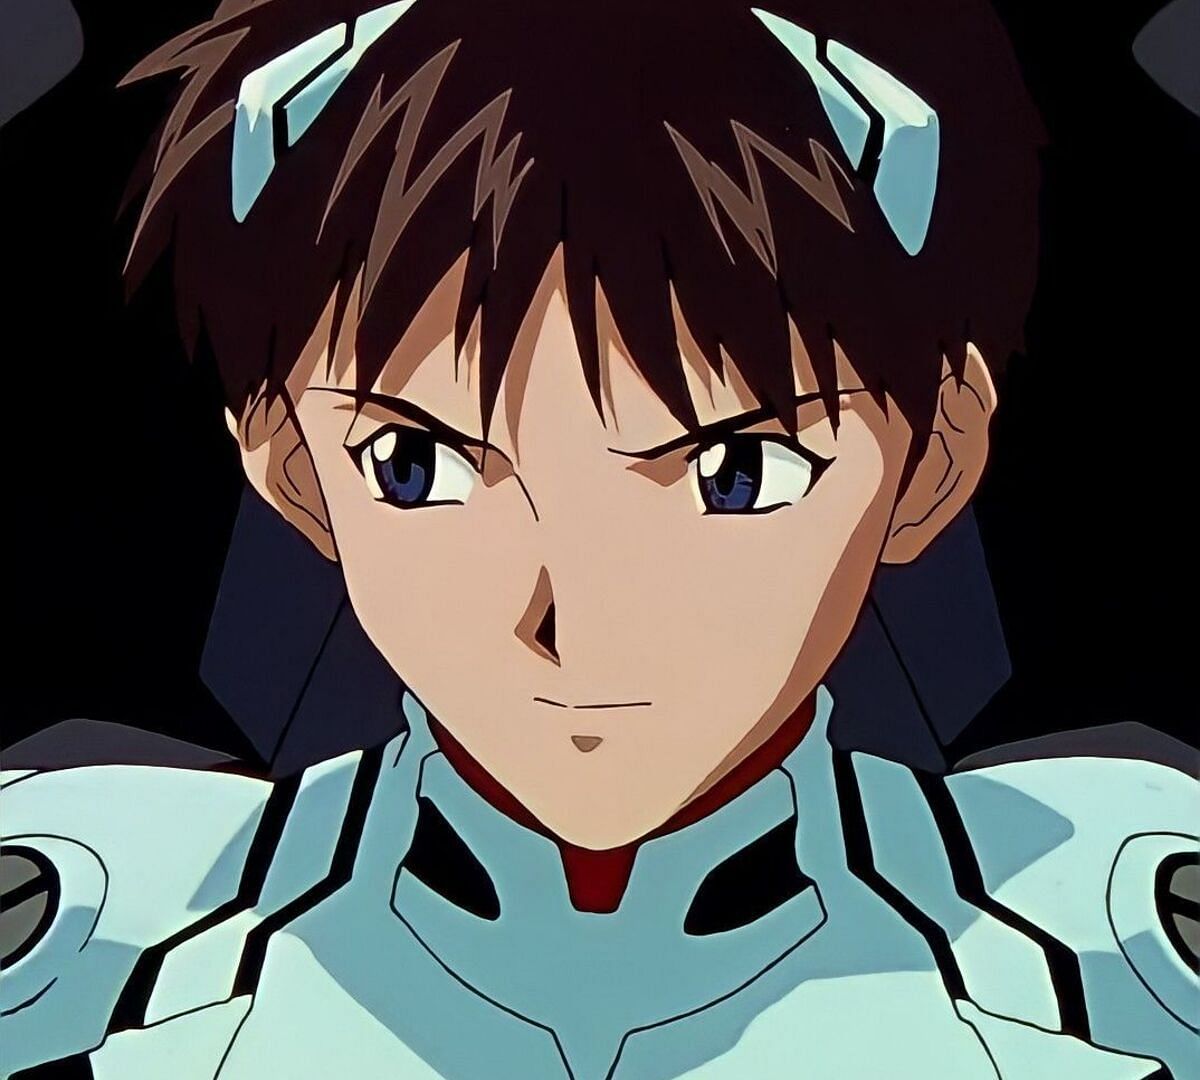 Shinji as seen in the anime (Image via Gainax studios)